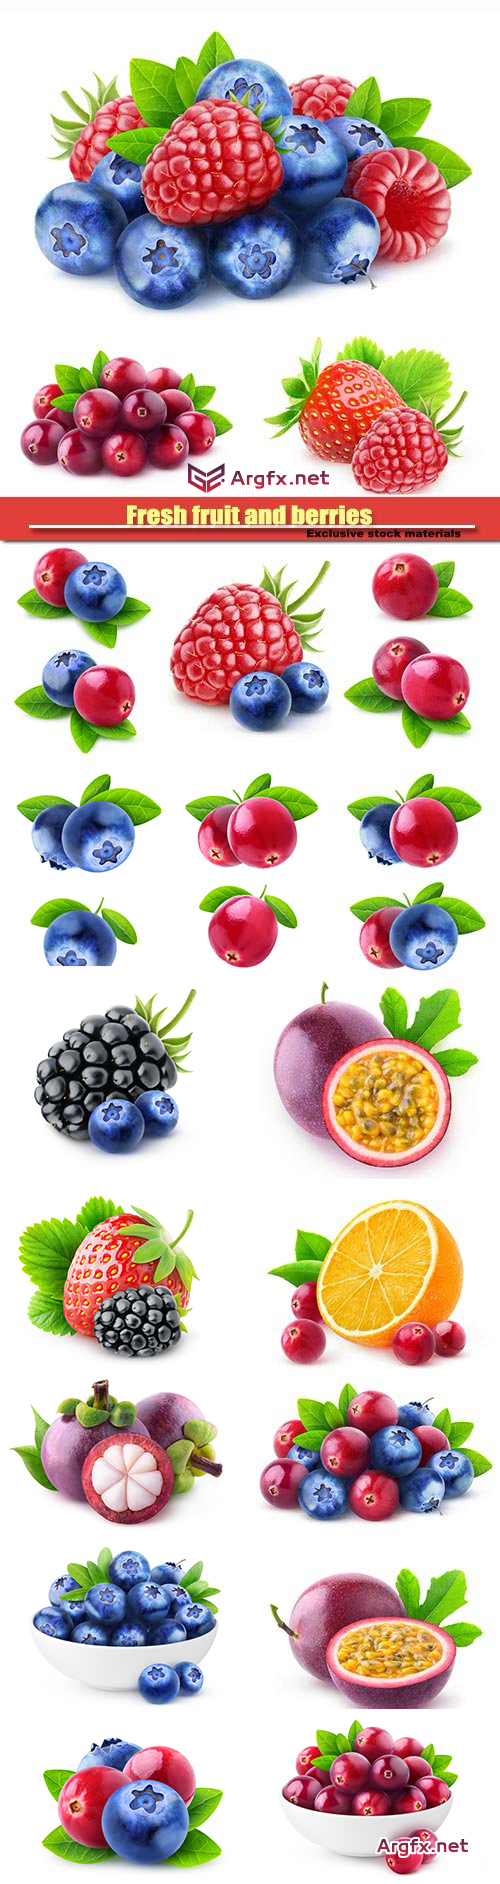 Fresh fruit and berries, blueberries and raspberries